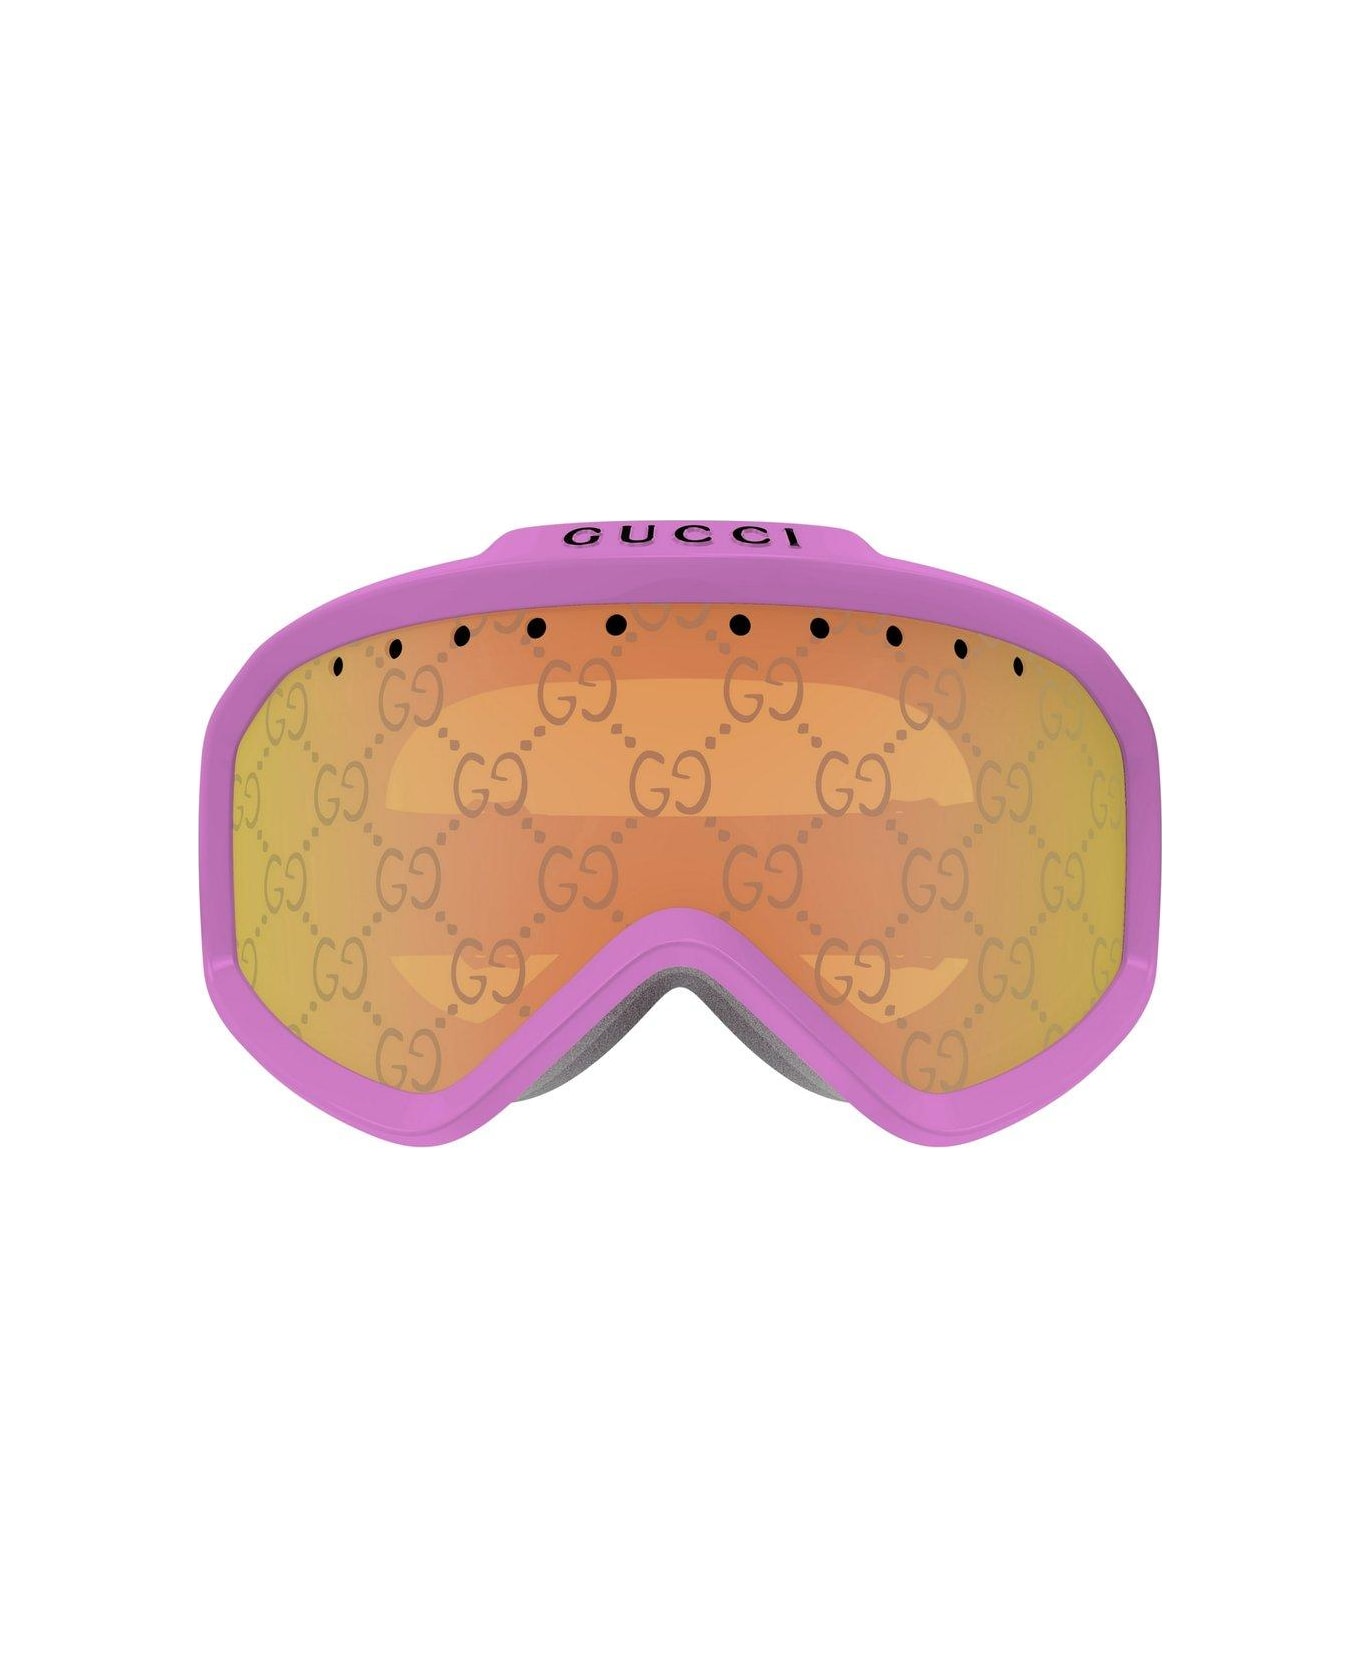 Gucci Eyewear Ski Oversized Frame Goggles Sunglasses - 004 PINK MULTICOLOR YELLOW